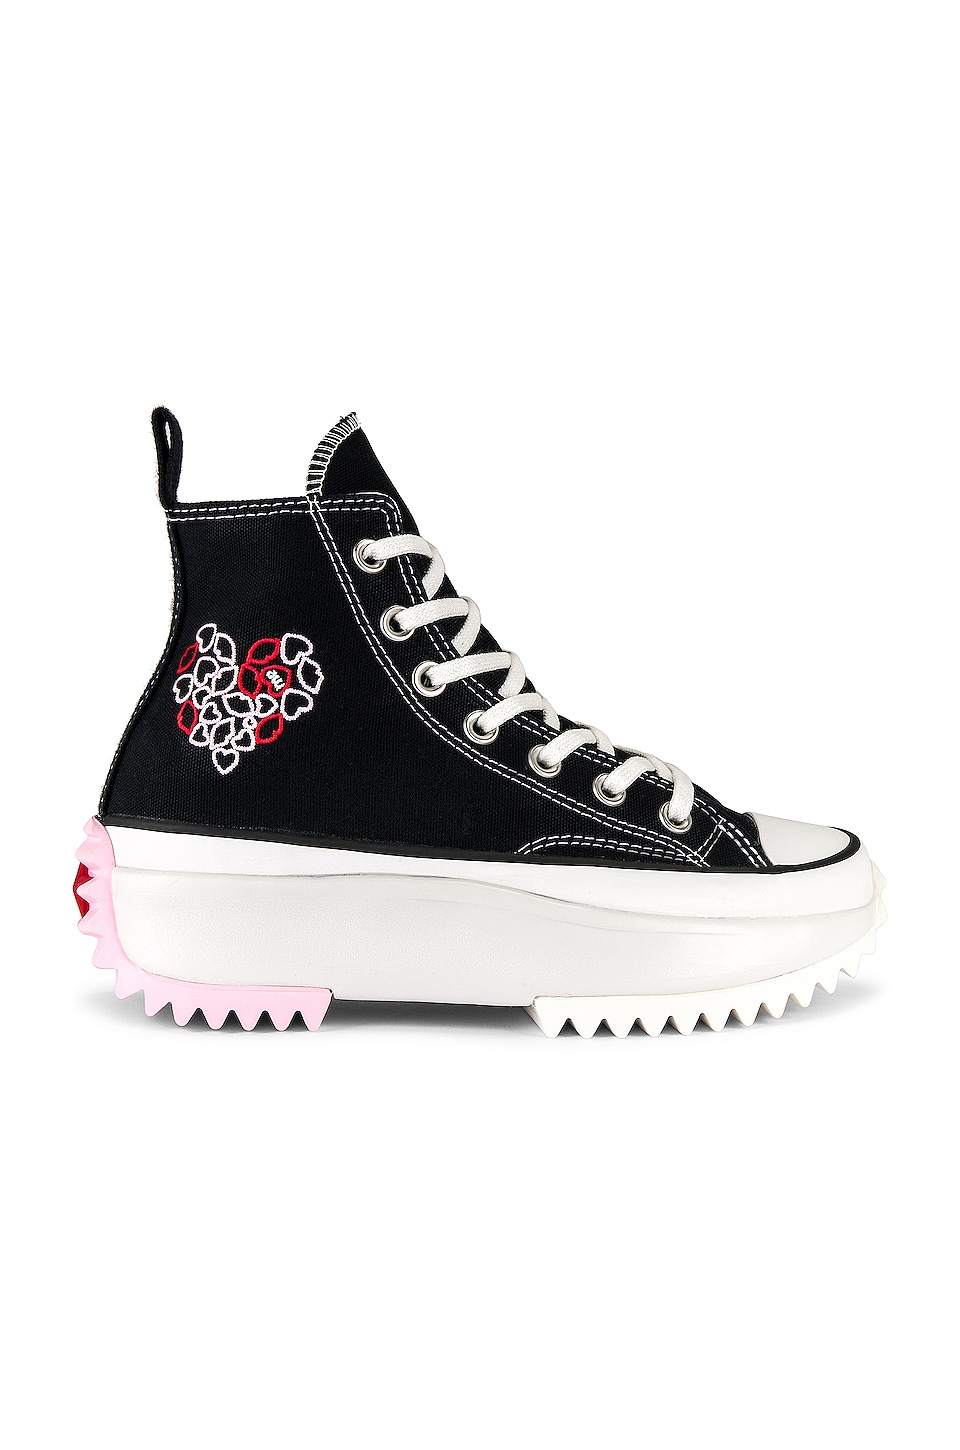 Converse Run Star Hike Sneaker in Black, University Red, & Cherry Blossom |  REVOLVE